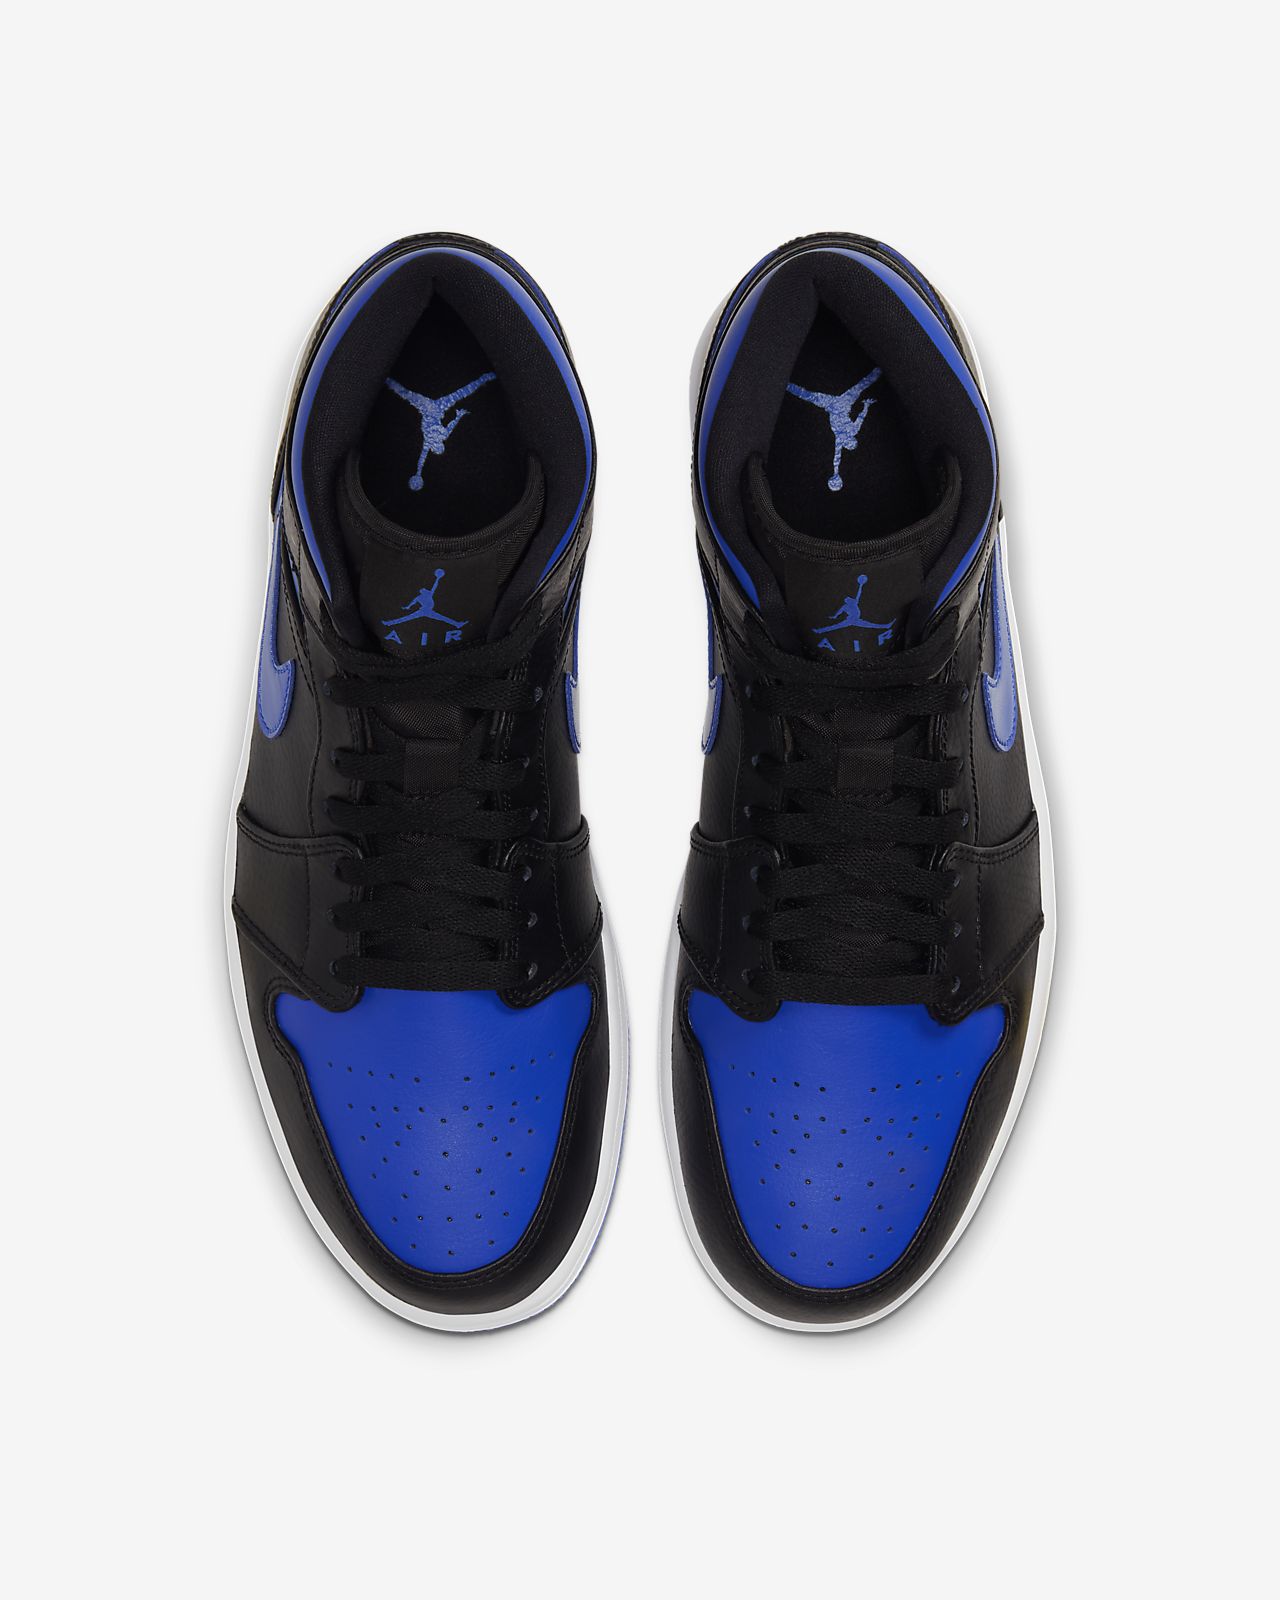 Nike Air Jordan 28 kopen